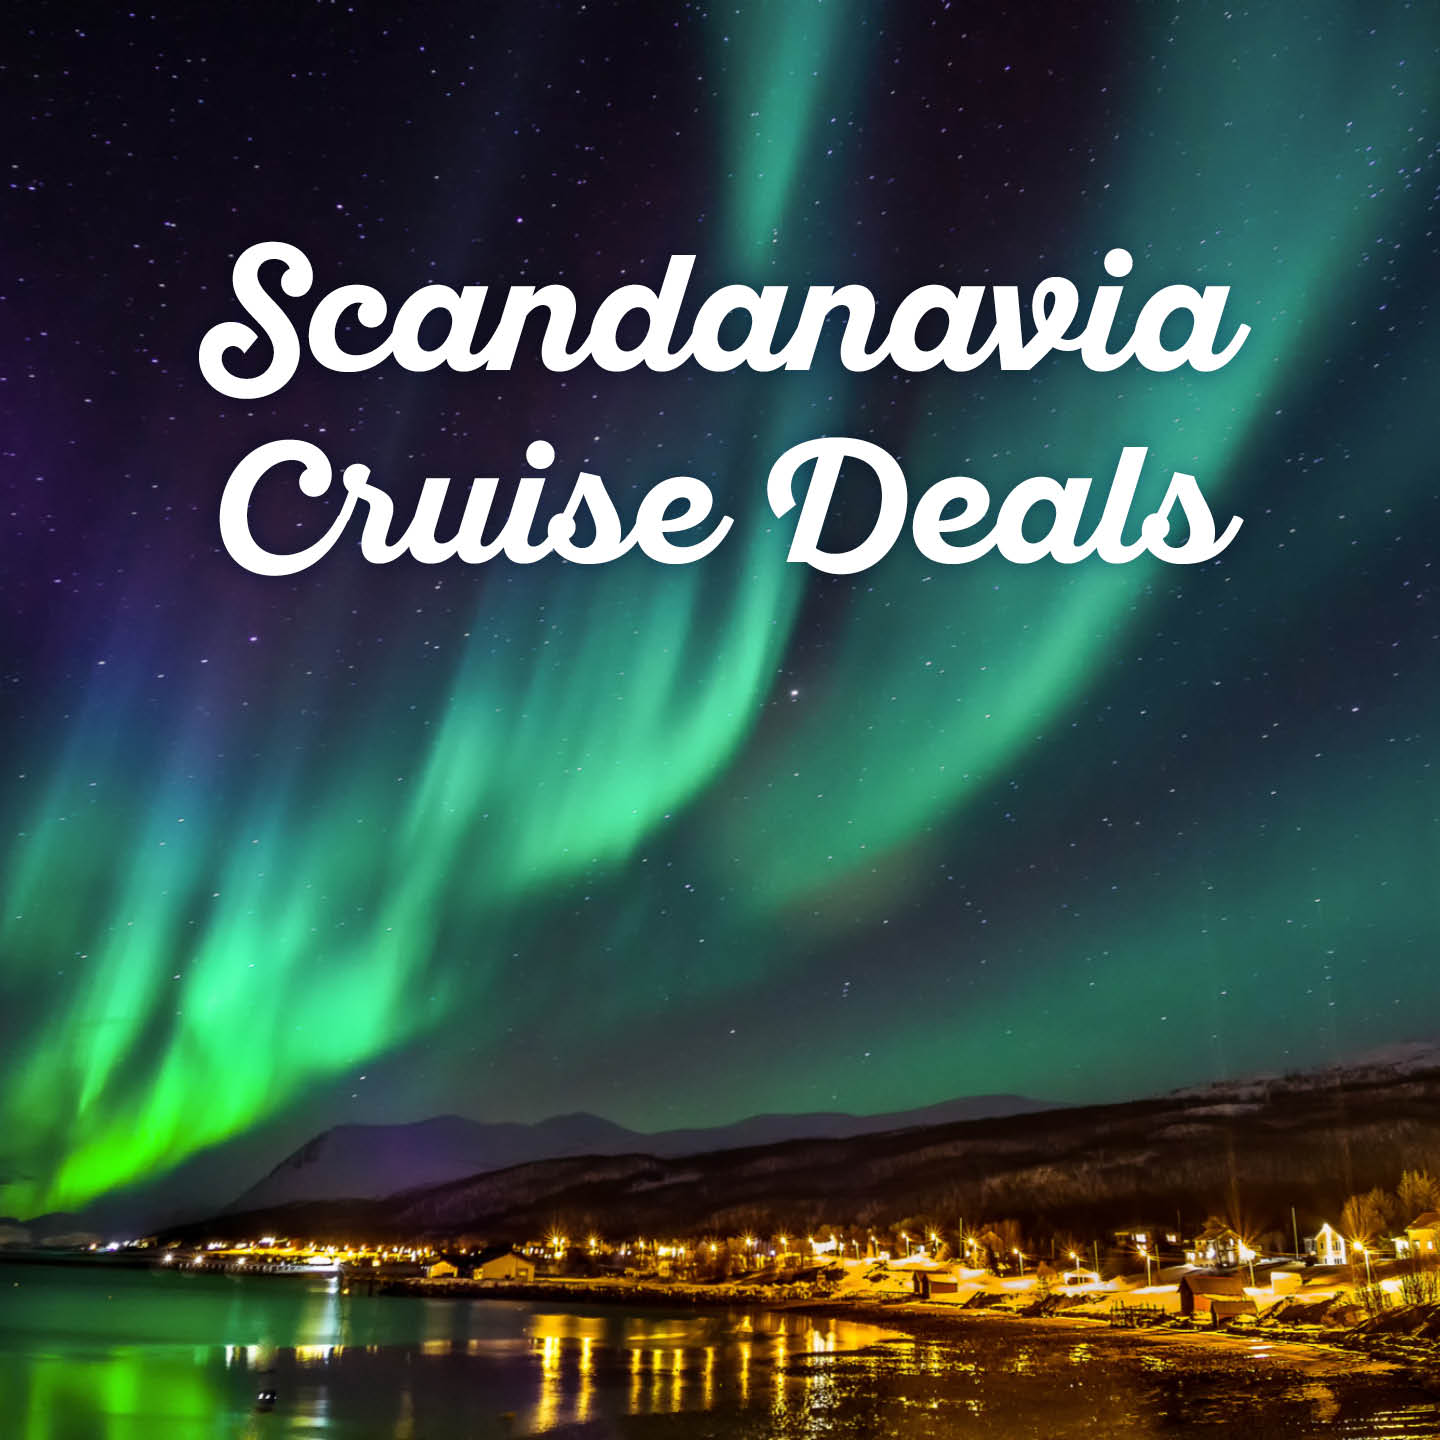 scandanavia-cruise-deals1-thumb.jpg